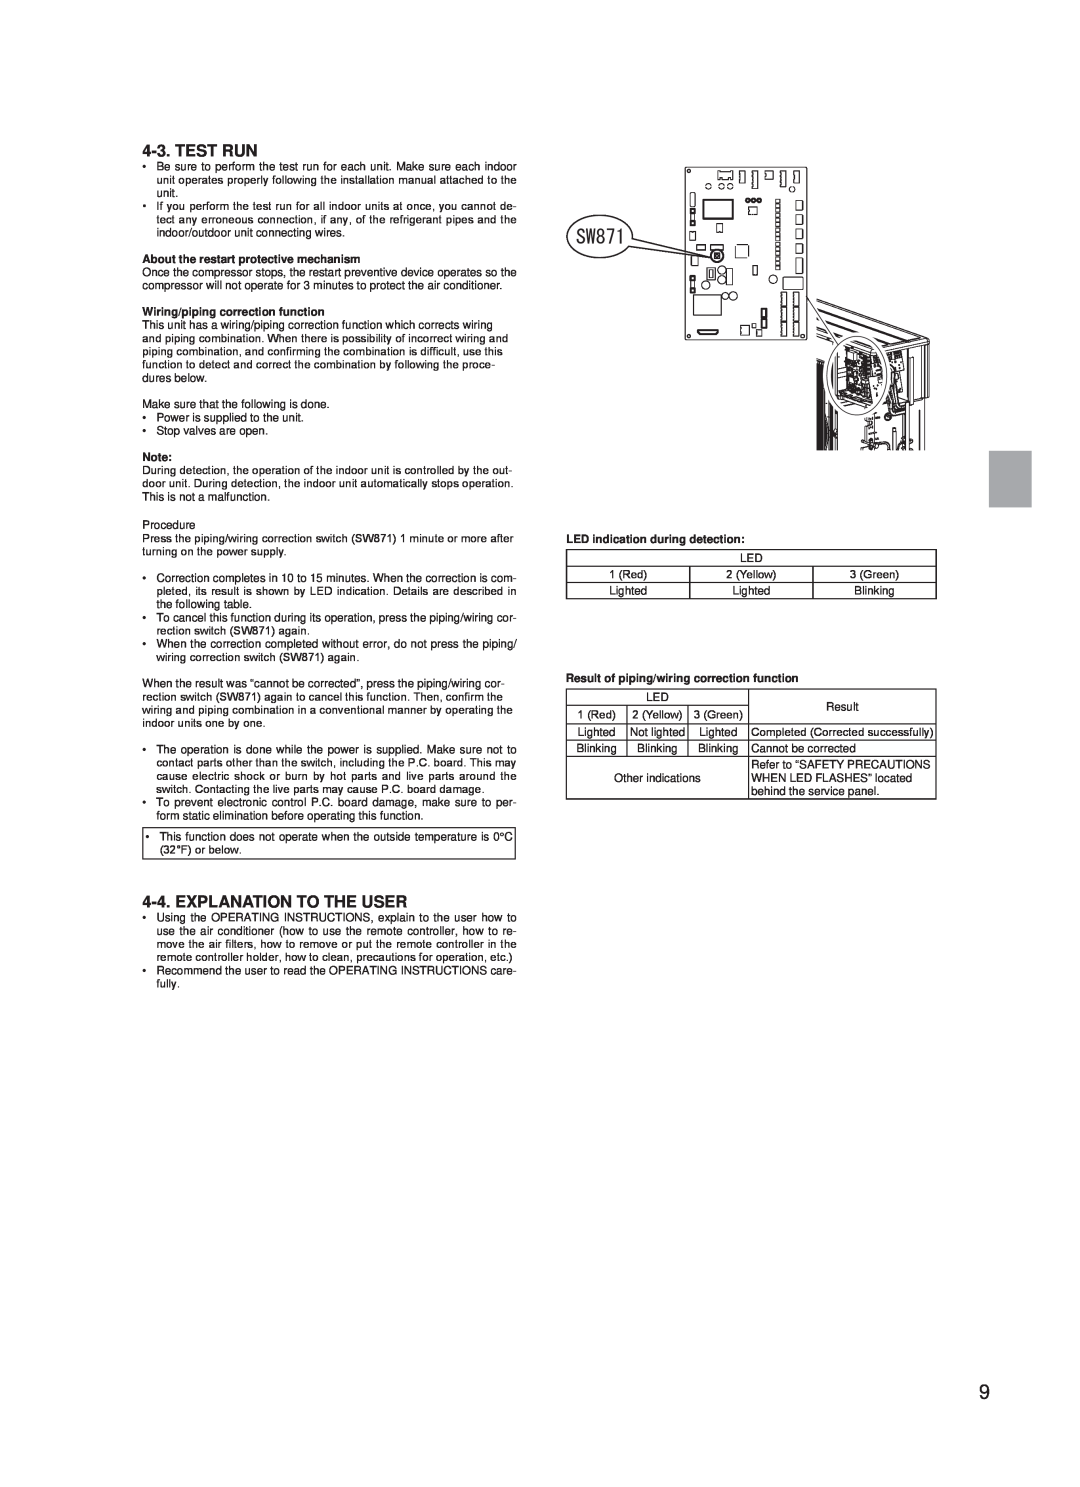 Troy-Bilt MXZ-4A36NA, MXZ-3A30NA Test Run, Explanation To The User, About the restart protective mechanism 